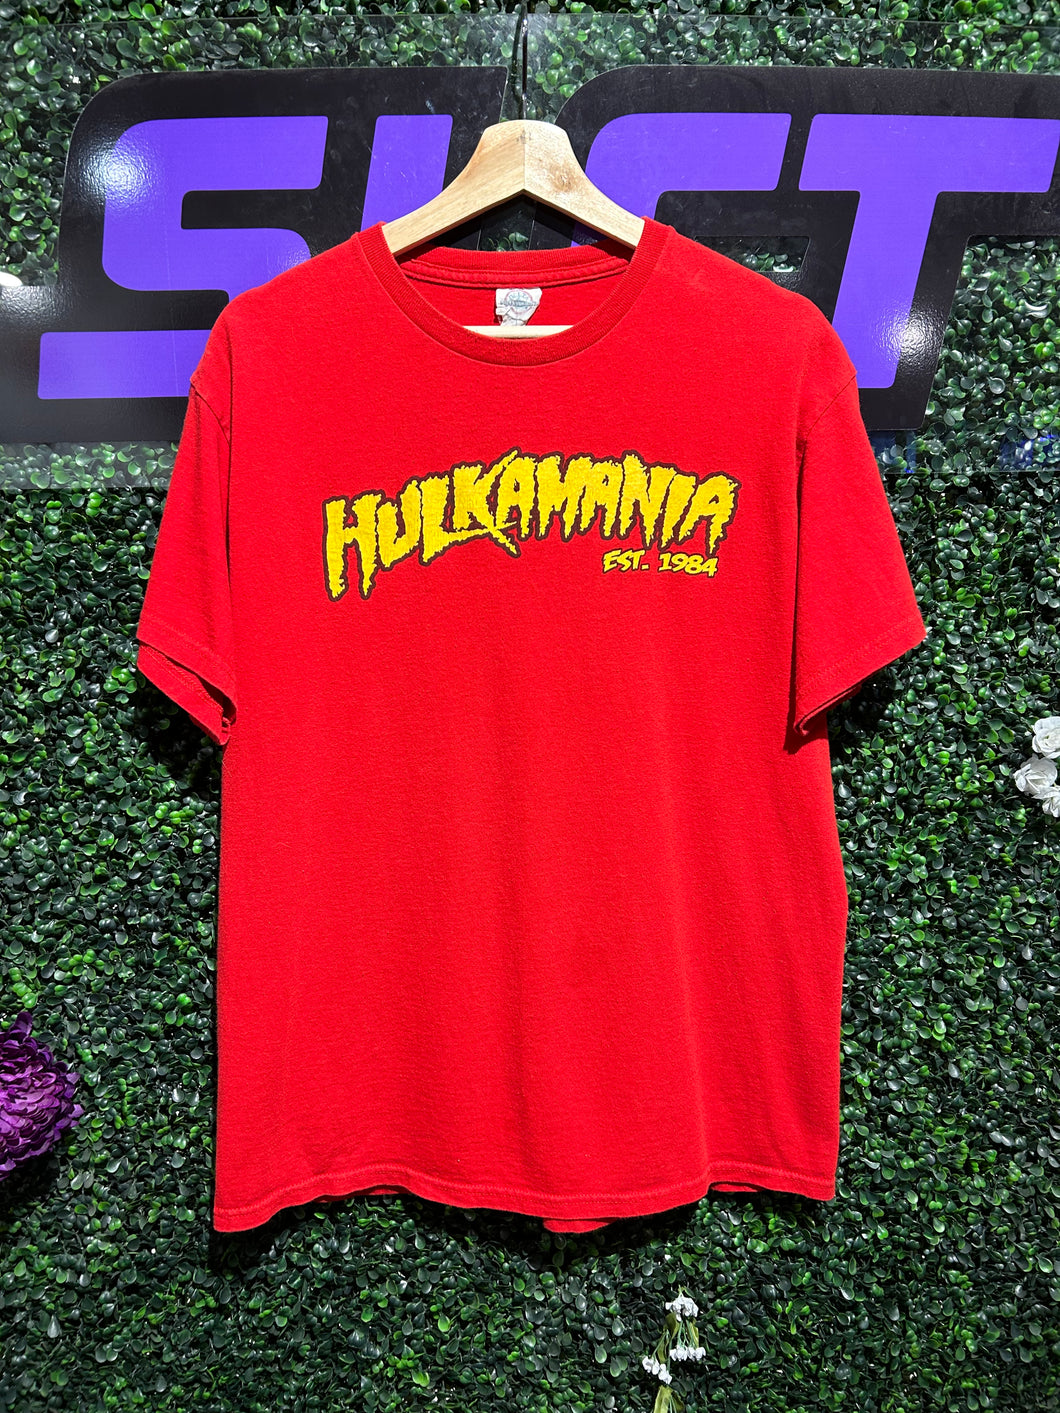 Vintage Hulkmania 30th Anniversary T-Shirt. Size M/L